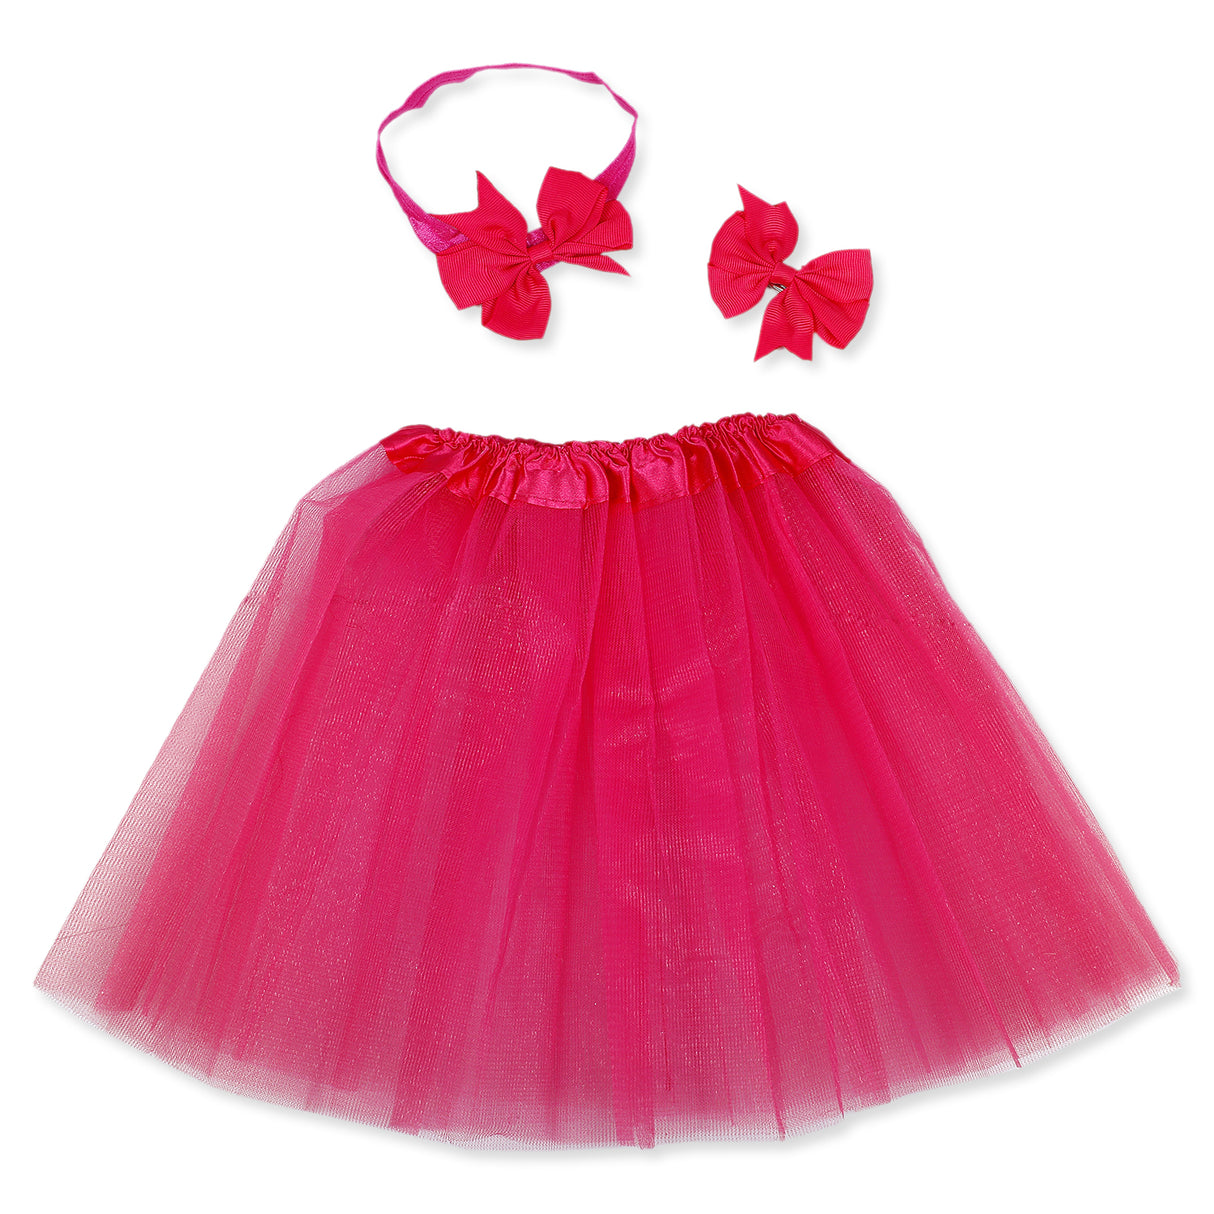 Adorable Premium Princess Tutu Skirt And Accessory Set